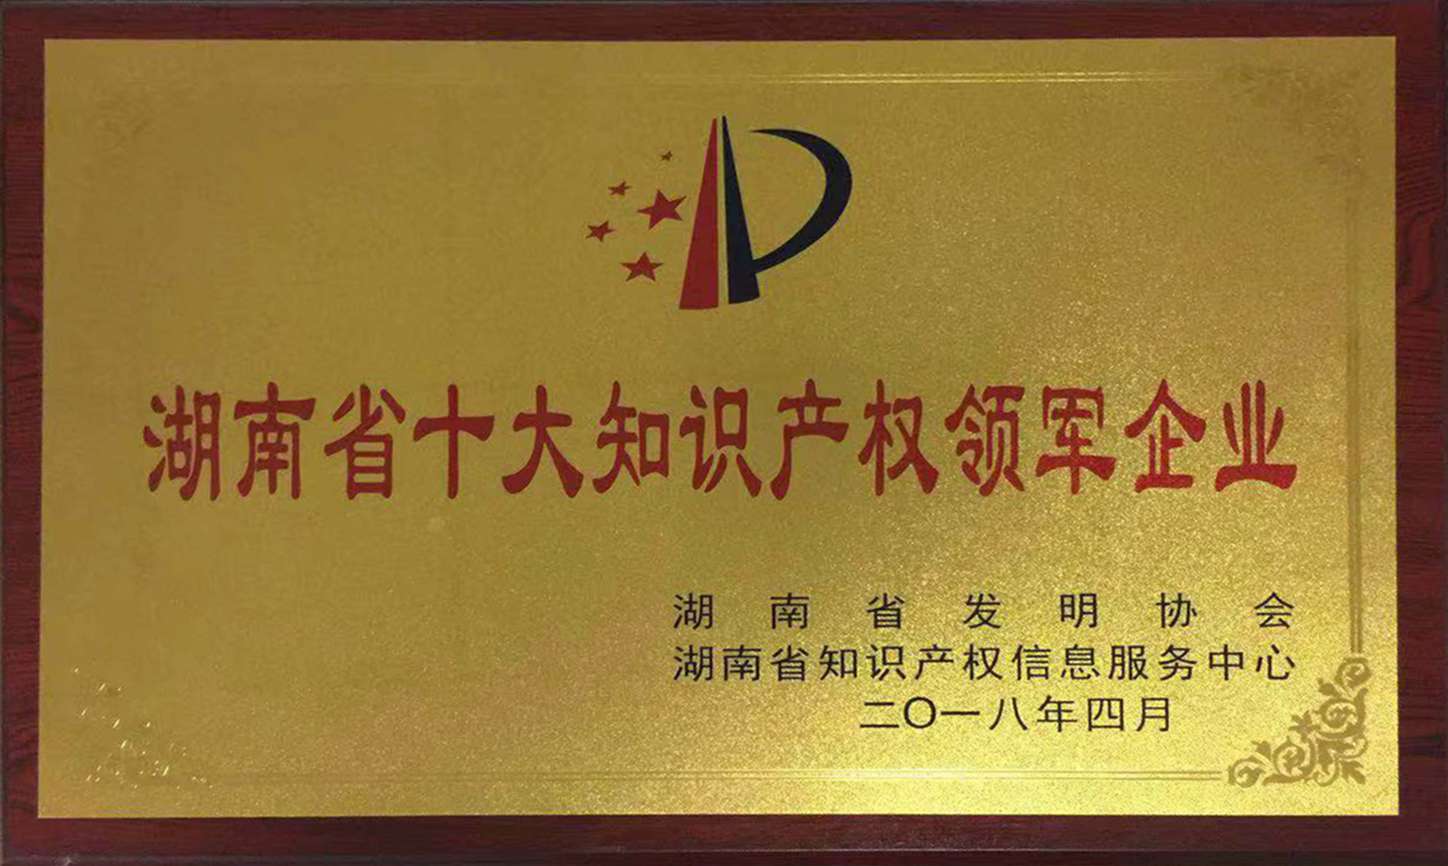 Top 10 Intellectual Property Leading Enterprises in Hunan Province (Zoomlion-Enviro)